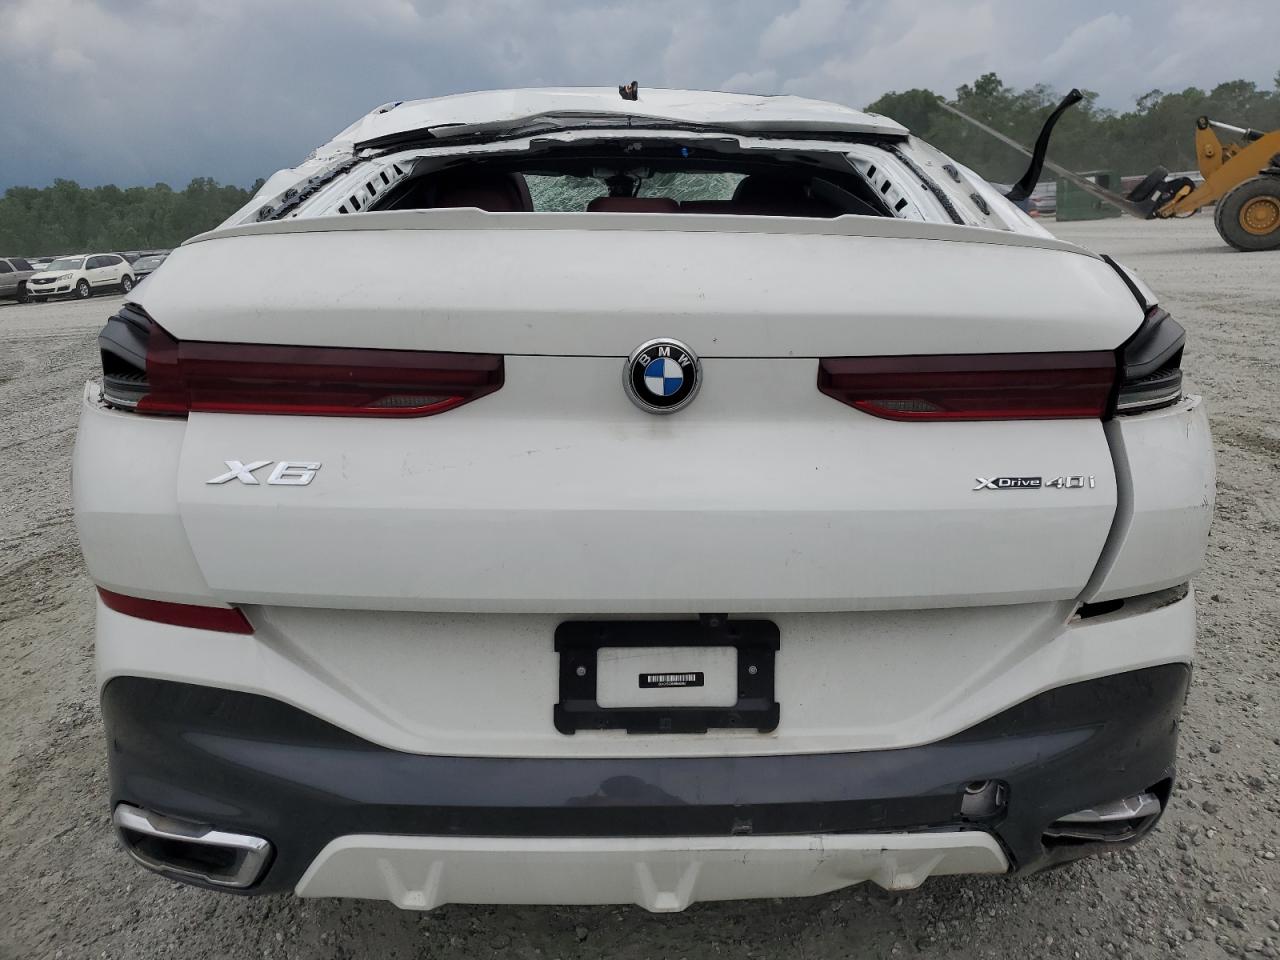 2022 BMW X6 XDRIVE40I VIN:5UXCY6C06N9K42667